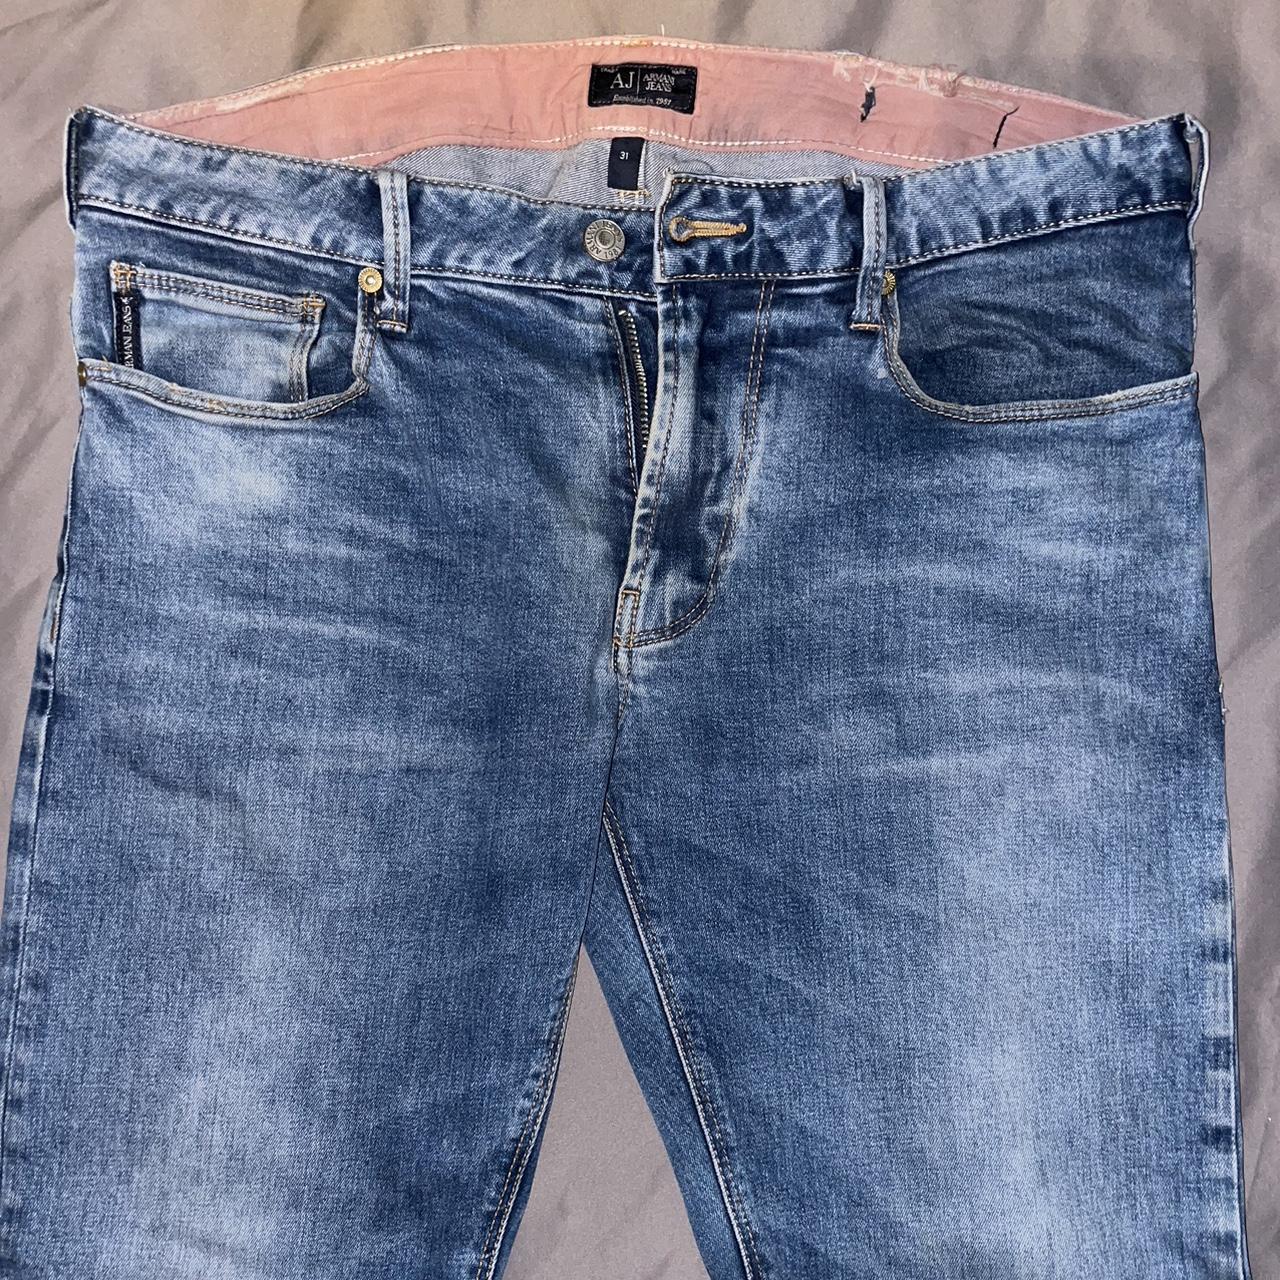 Armani Jeans slim fit light blue jeans 🌊 32” 32”... - Depop